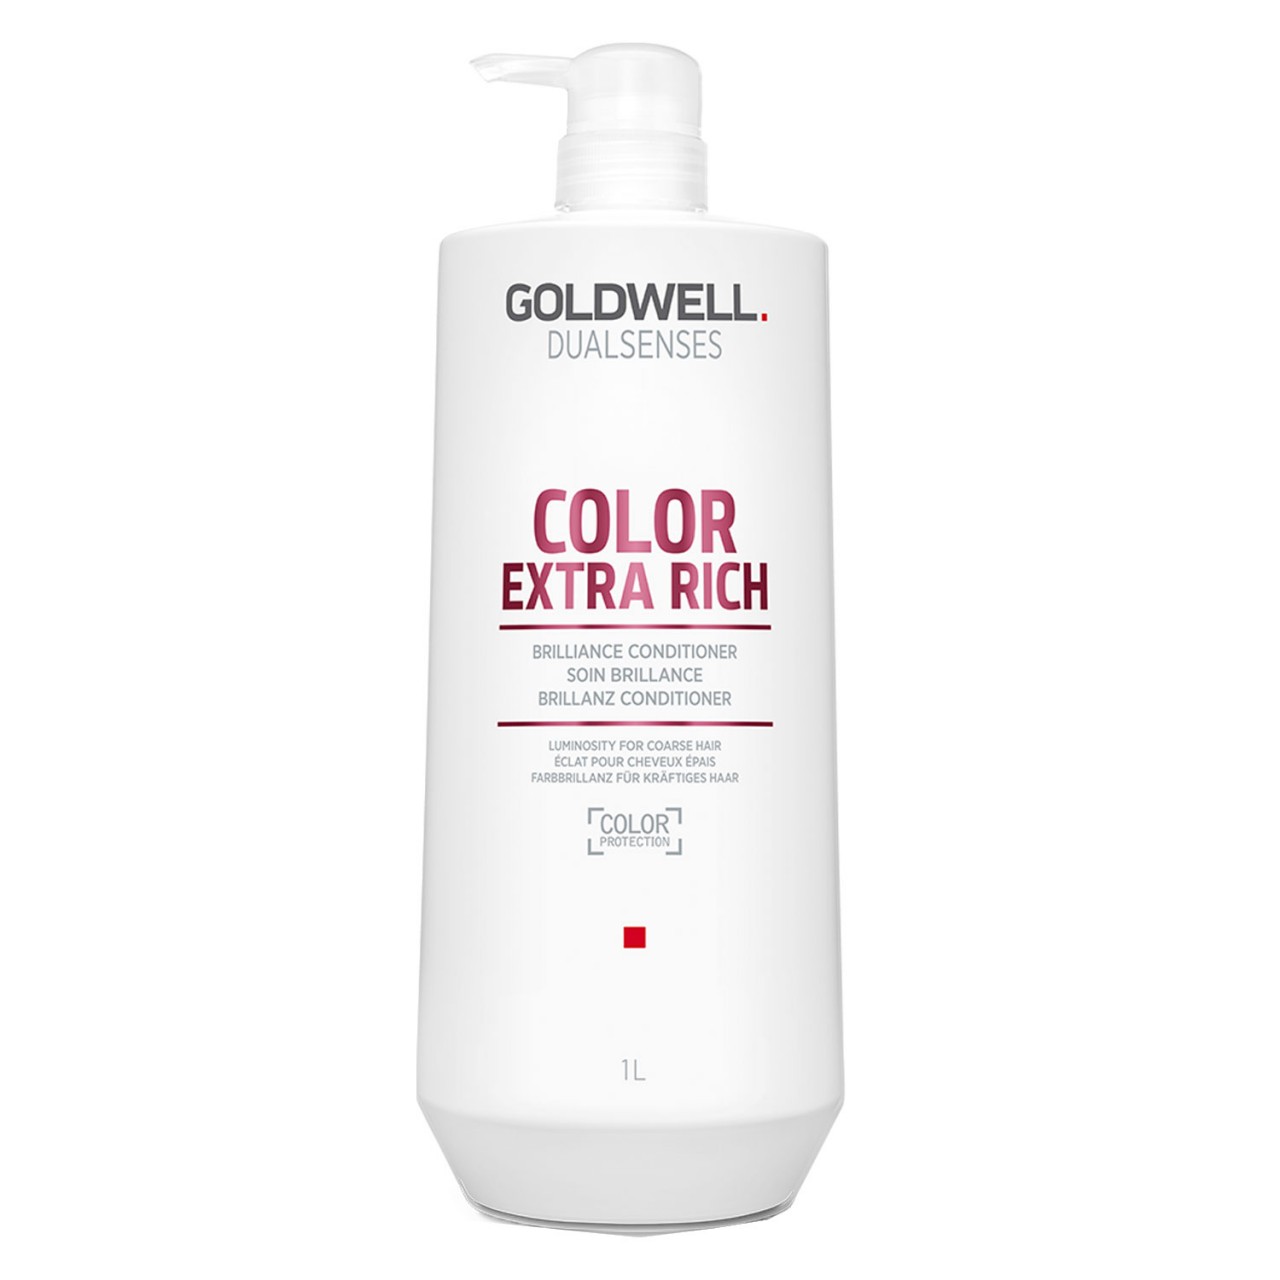 Dualsenses Color Extra Rich - Brilliance Conditioner von Goldwell